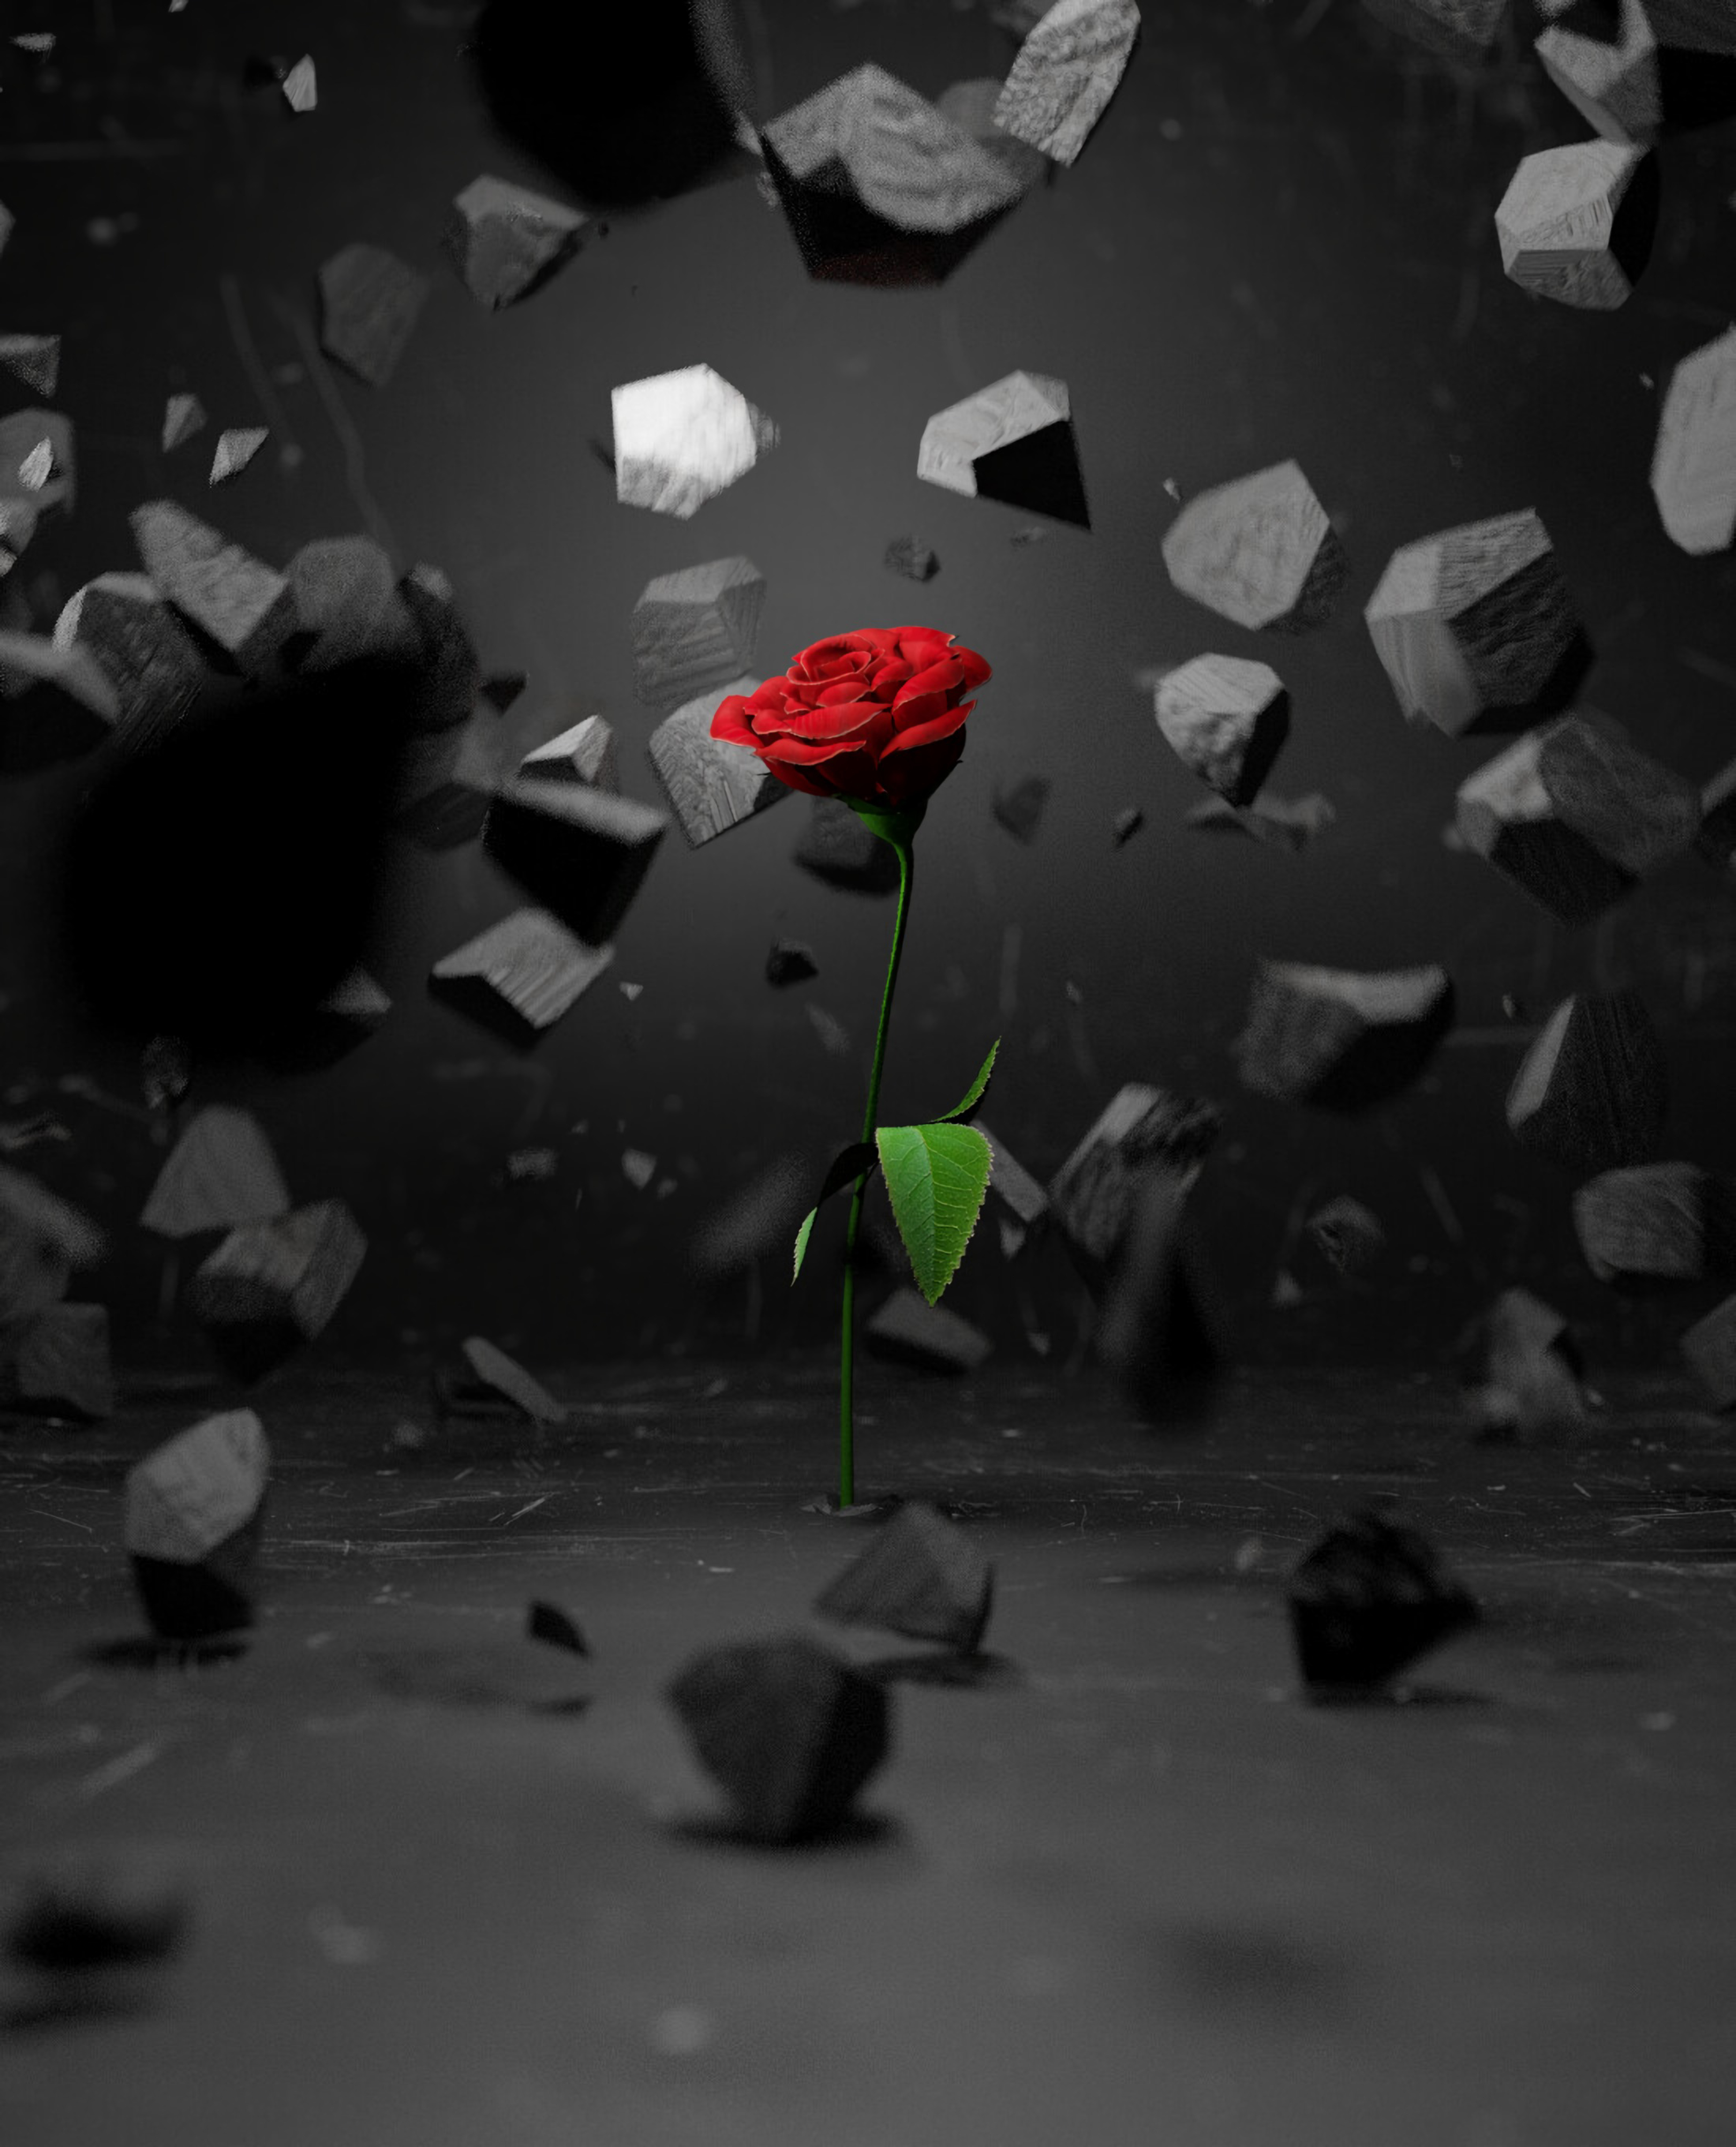 3d, rose, stones, rose flower, flower, smithereens, red, shards High Definition image